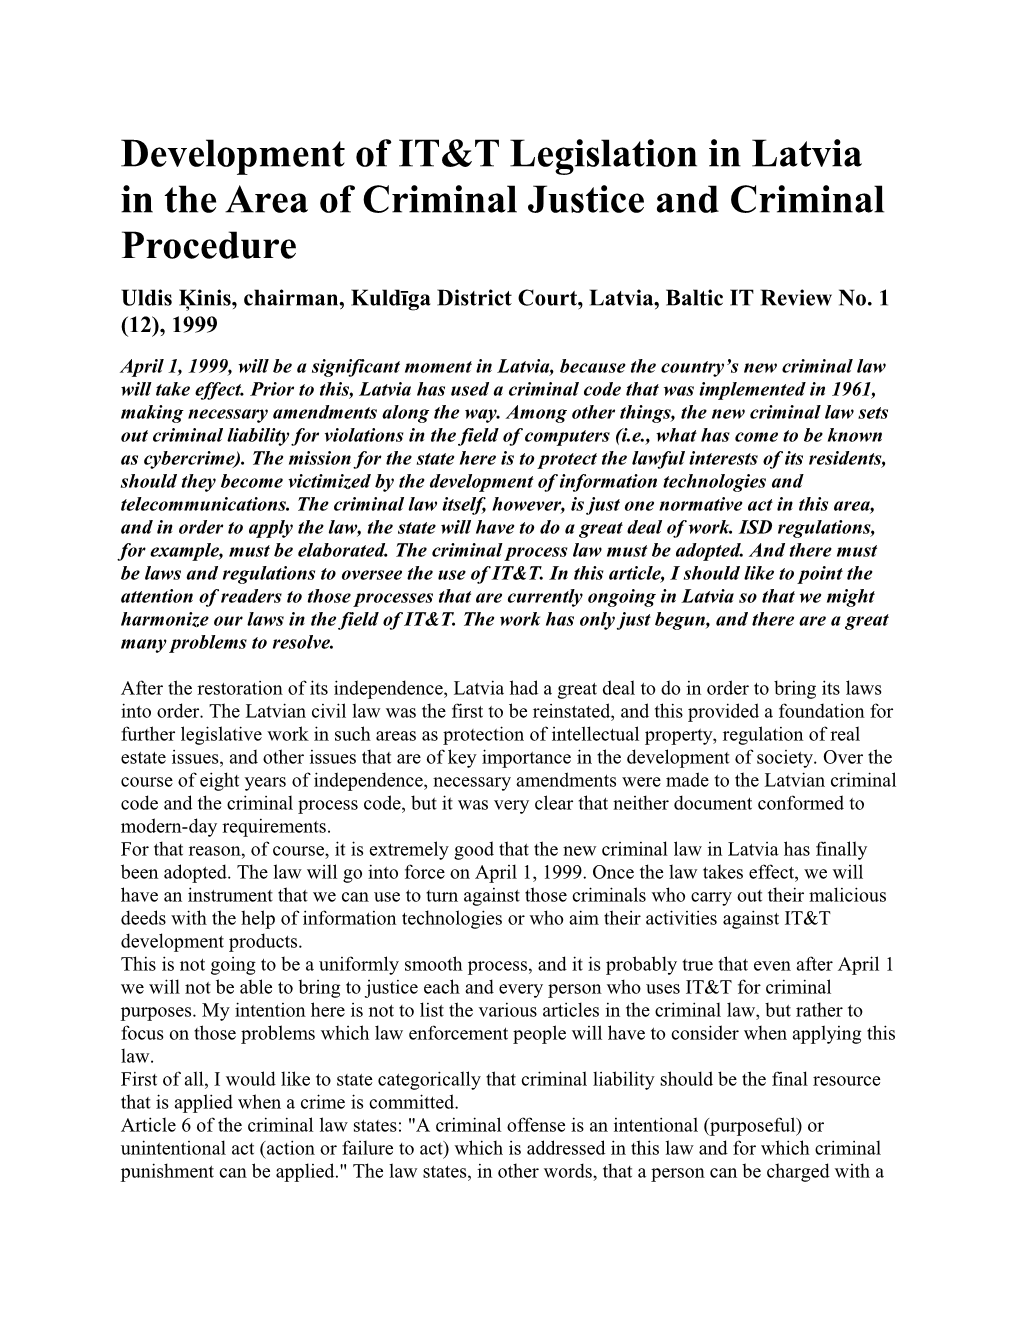 Development of IT&T Legislation in Latvia in the Area of Criminal Justice and Criminal Procedure